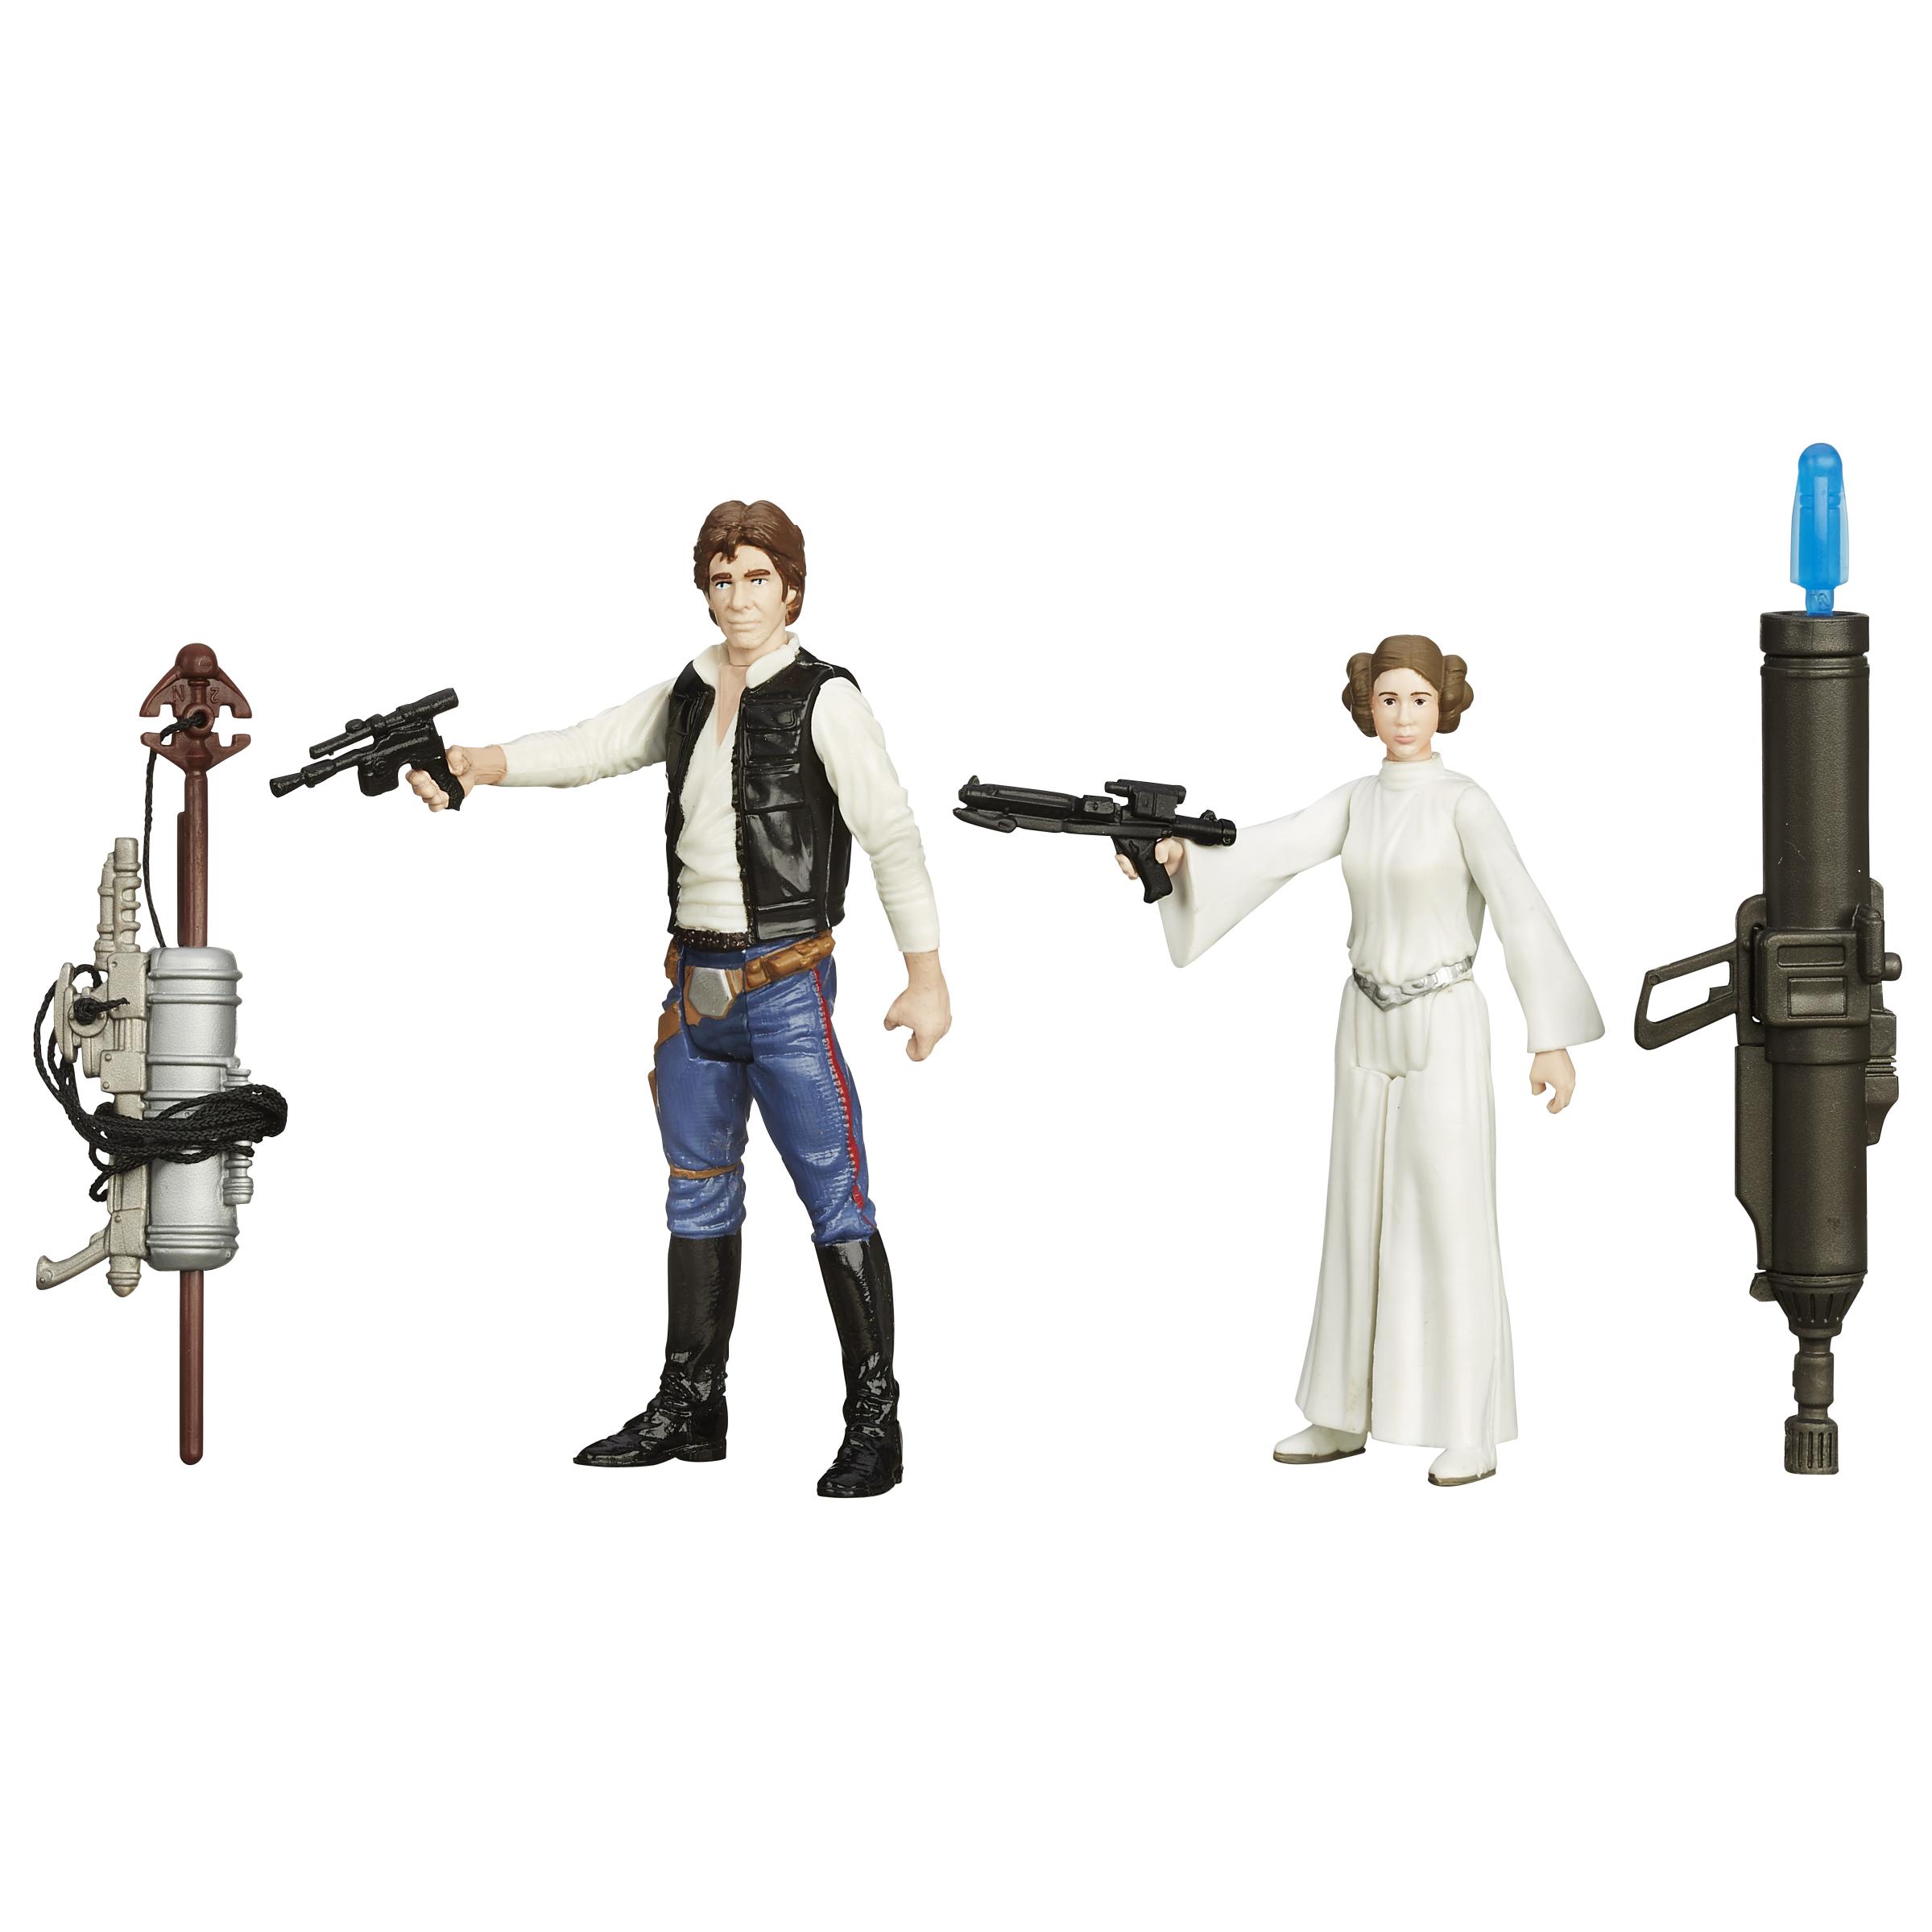 Star Wars The Force Awakens - Han Solo and Princess Leia